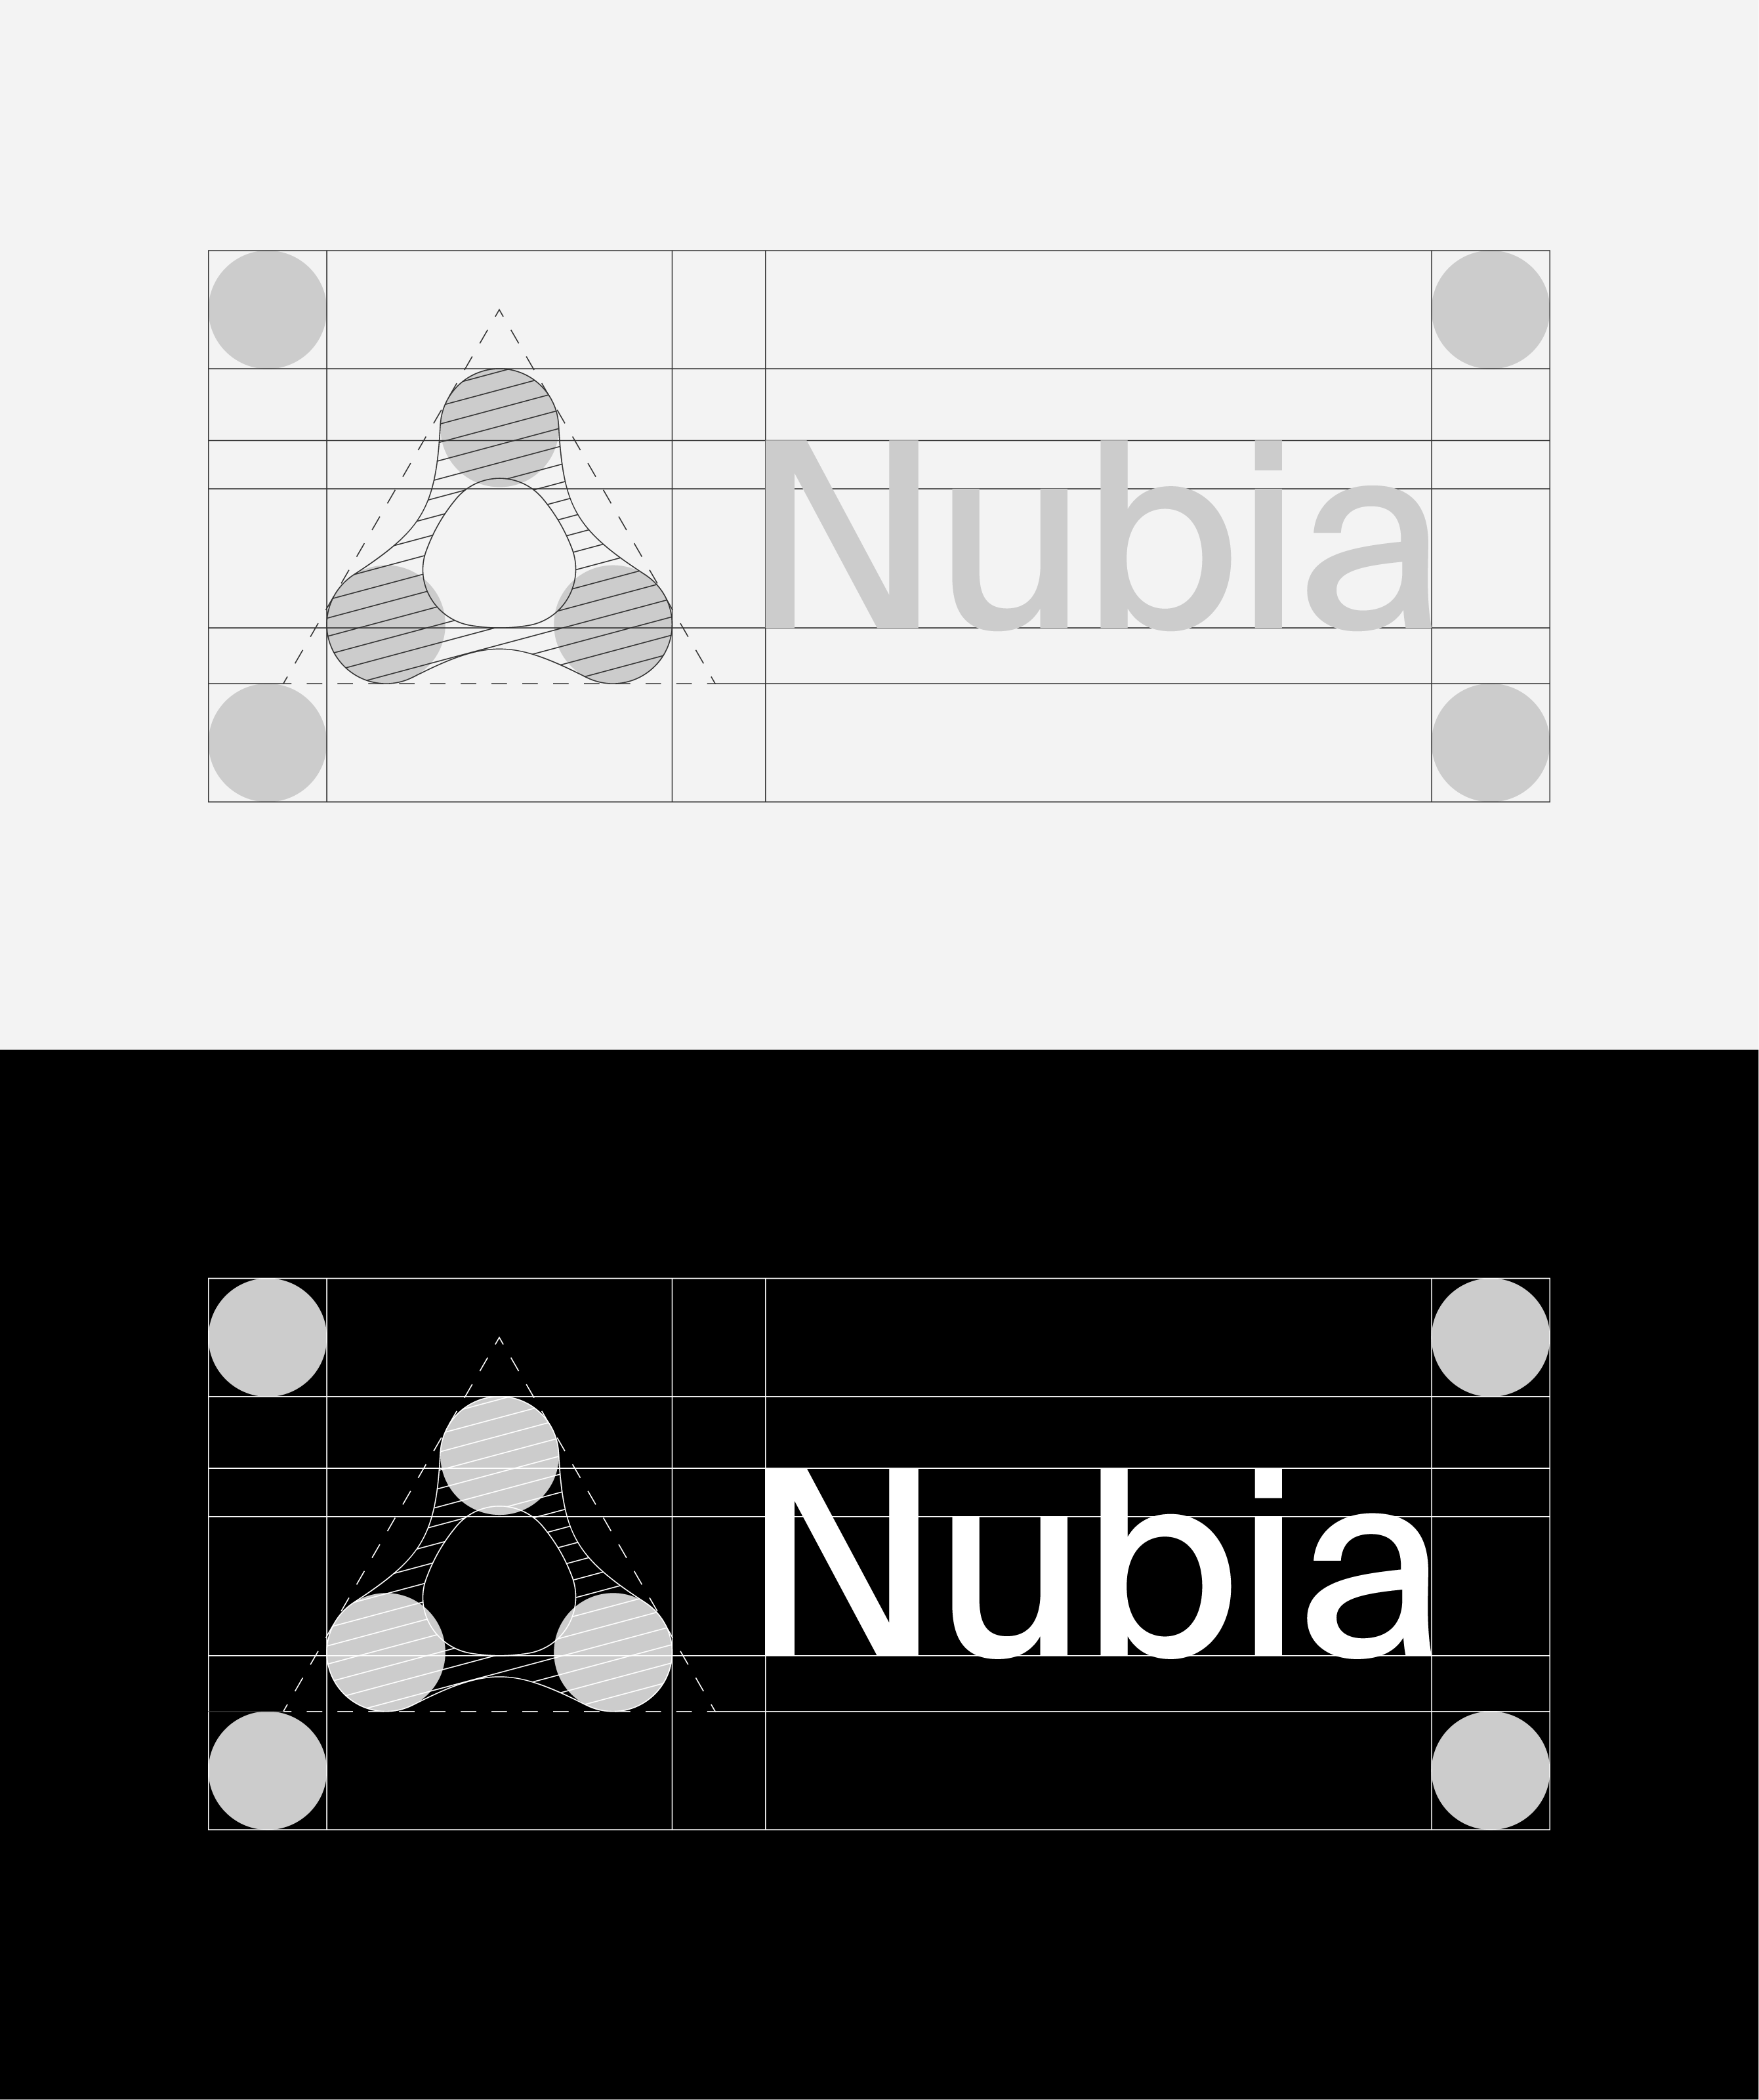 Nubia logo costruction